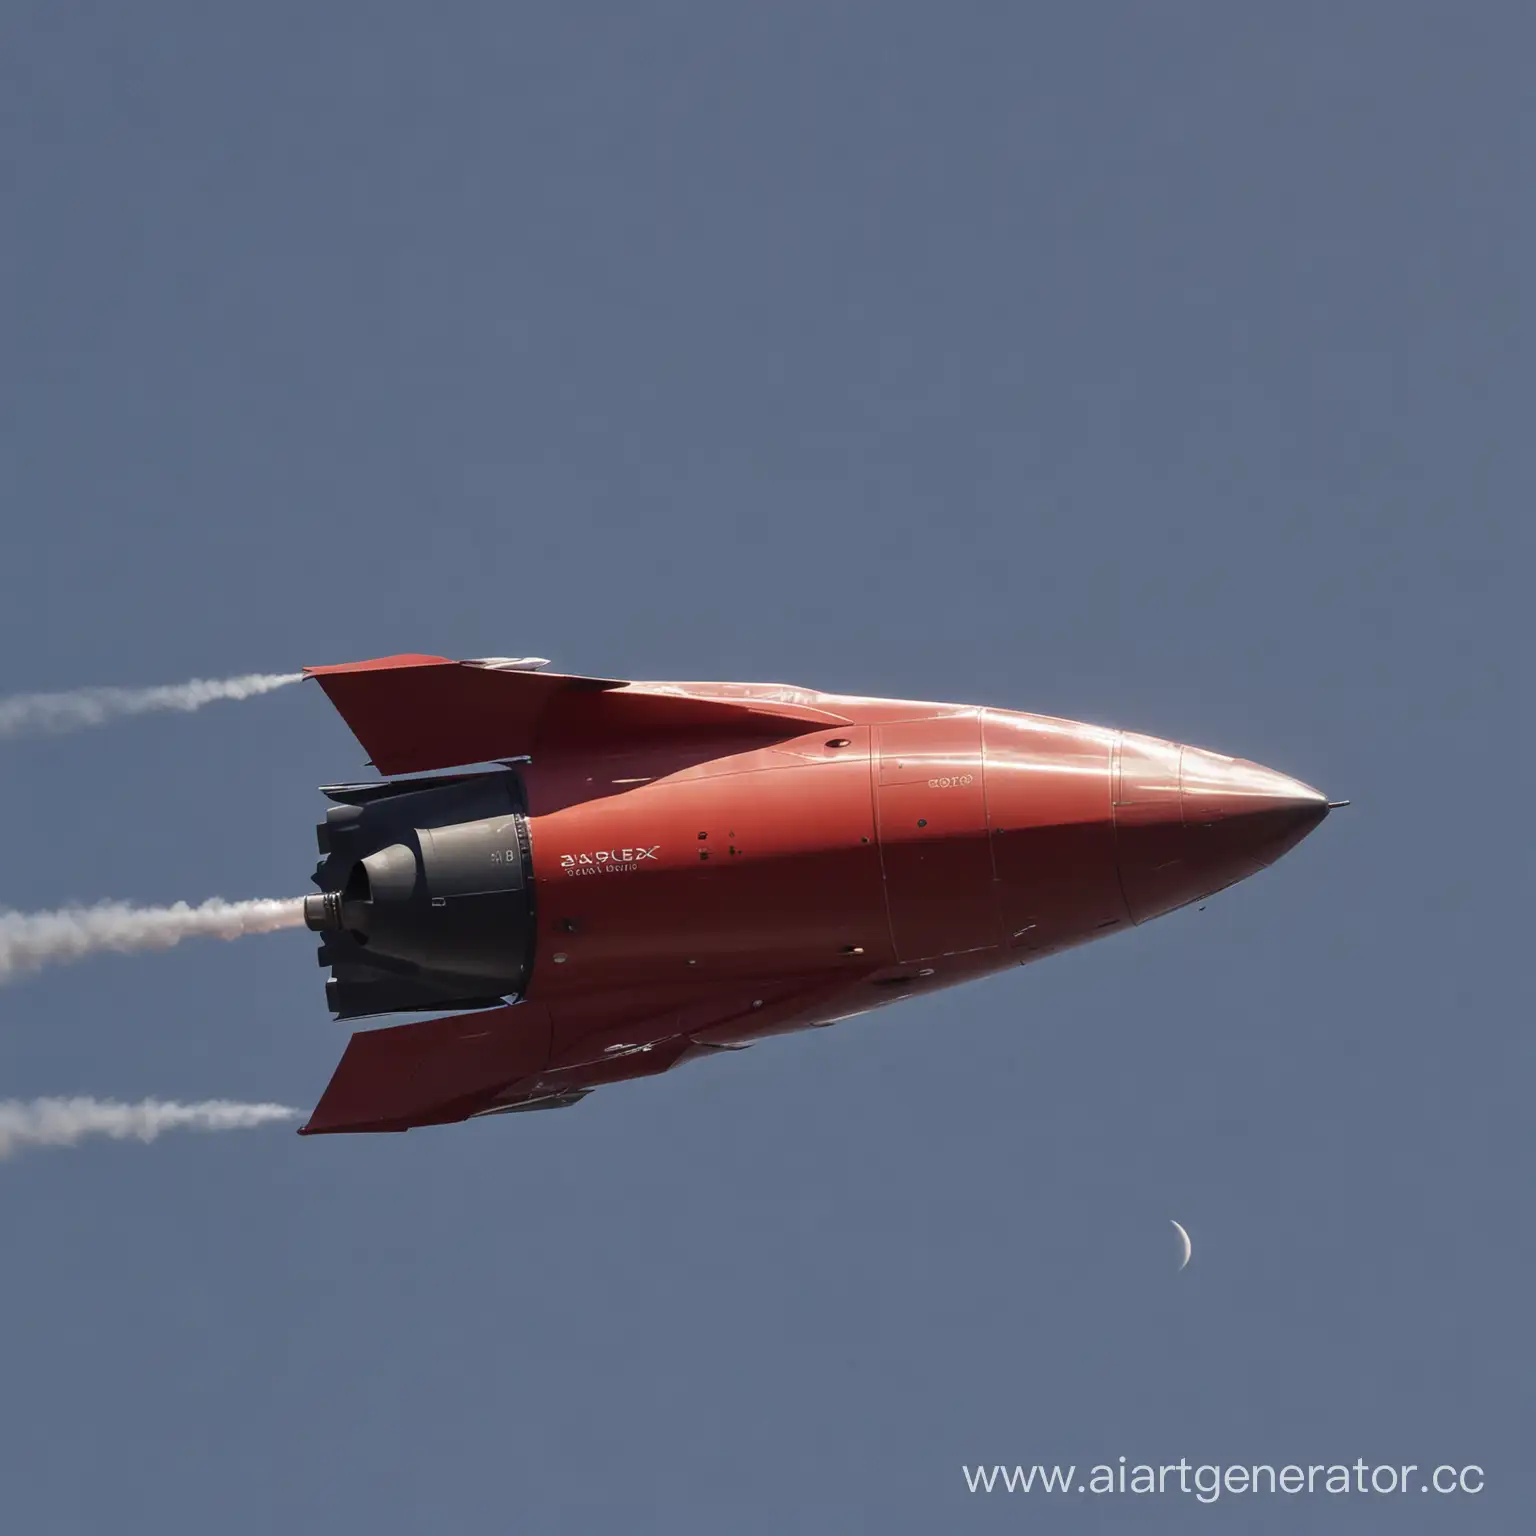  space rocket Aerodynamic red spacex